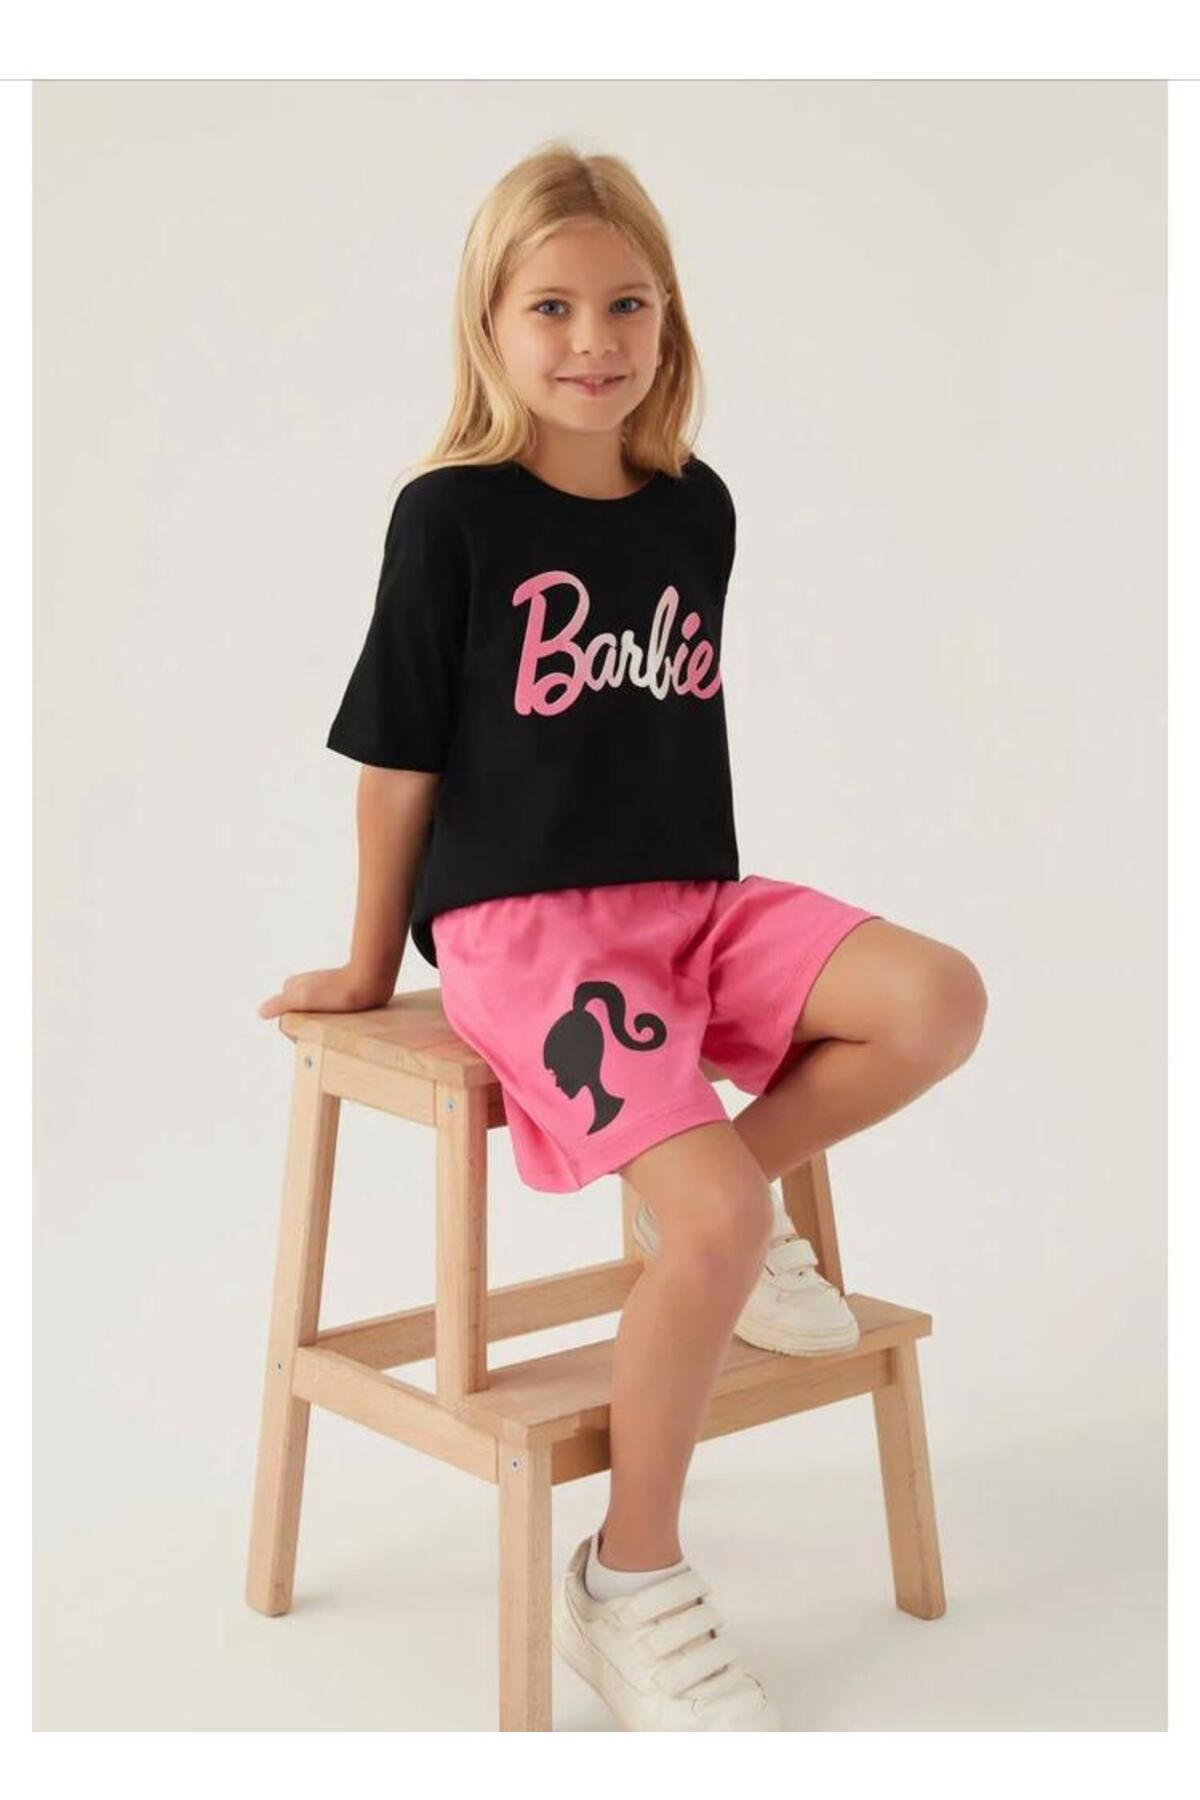 Barbie Patterned Siyah Kız Çocuk Şort Takım